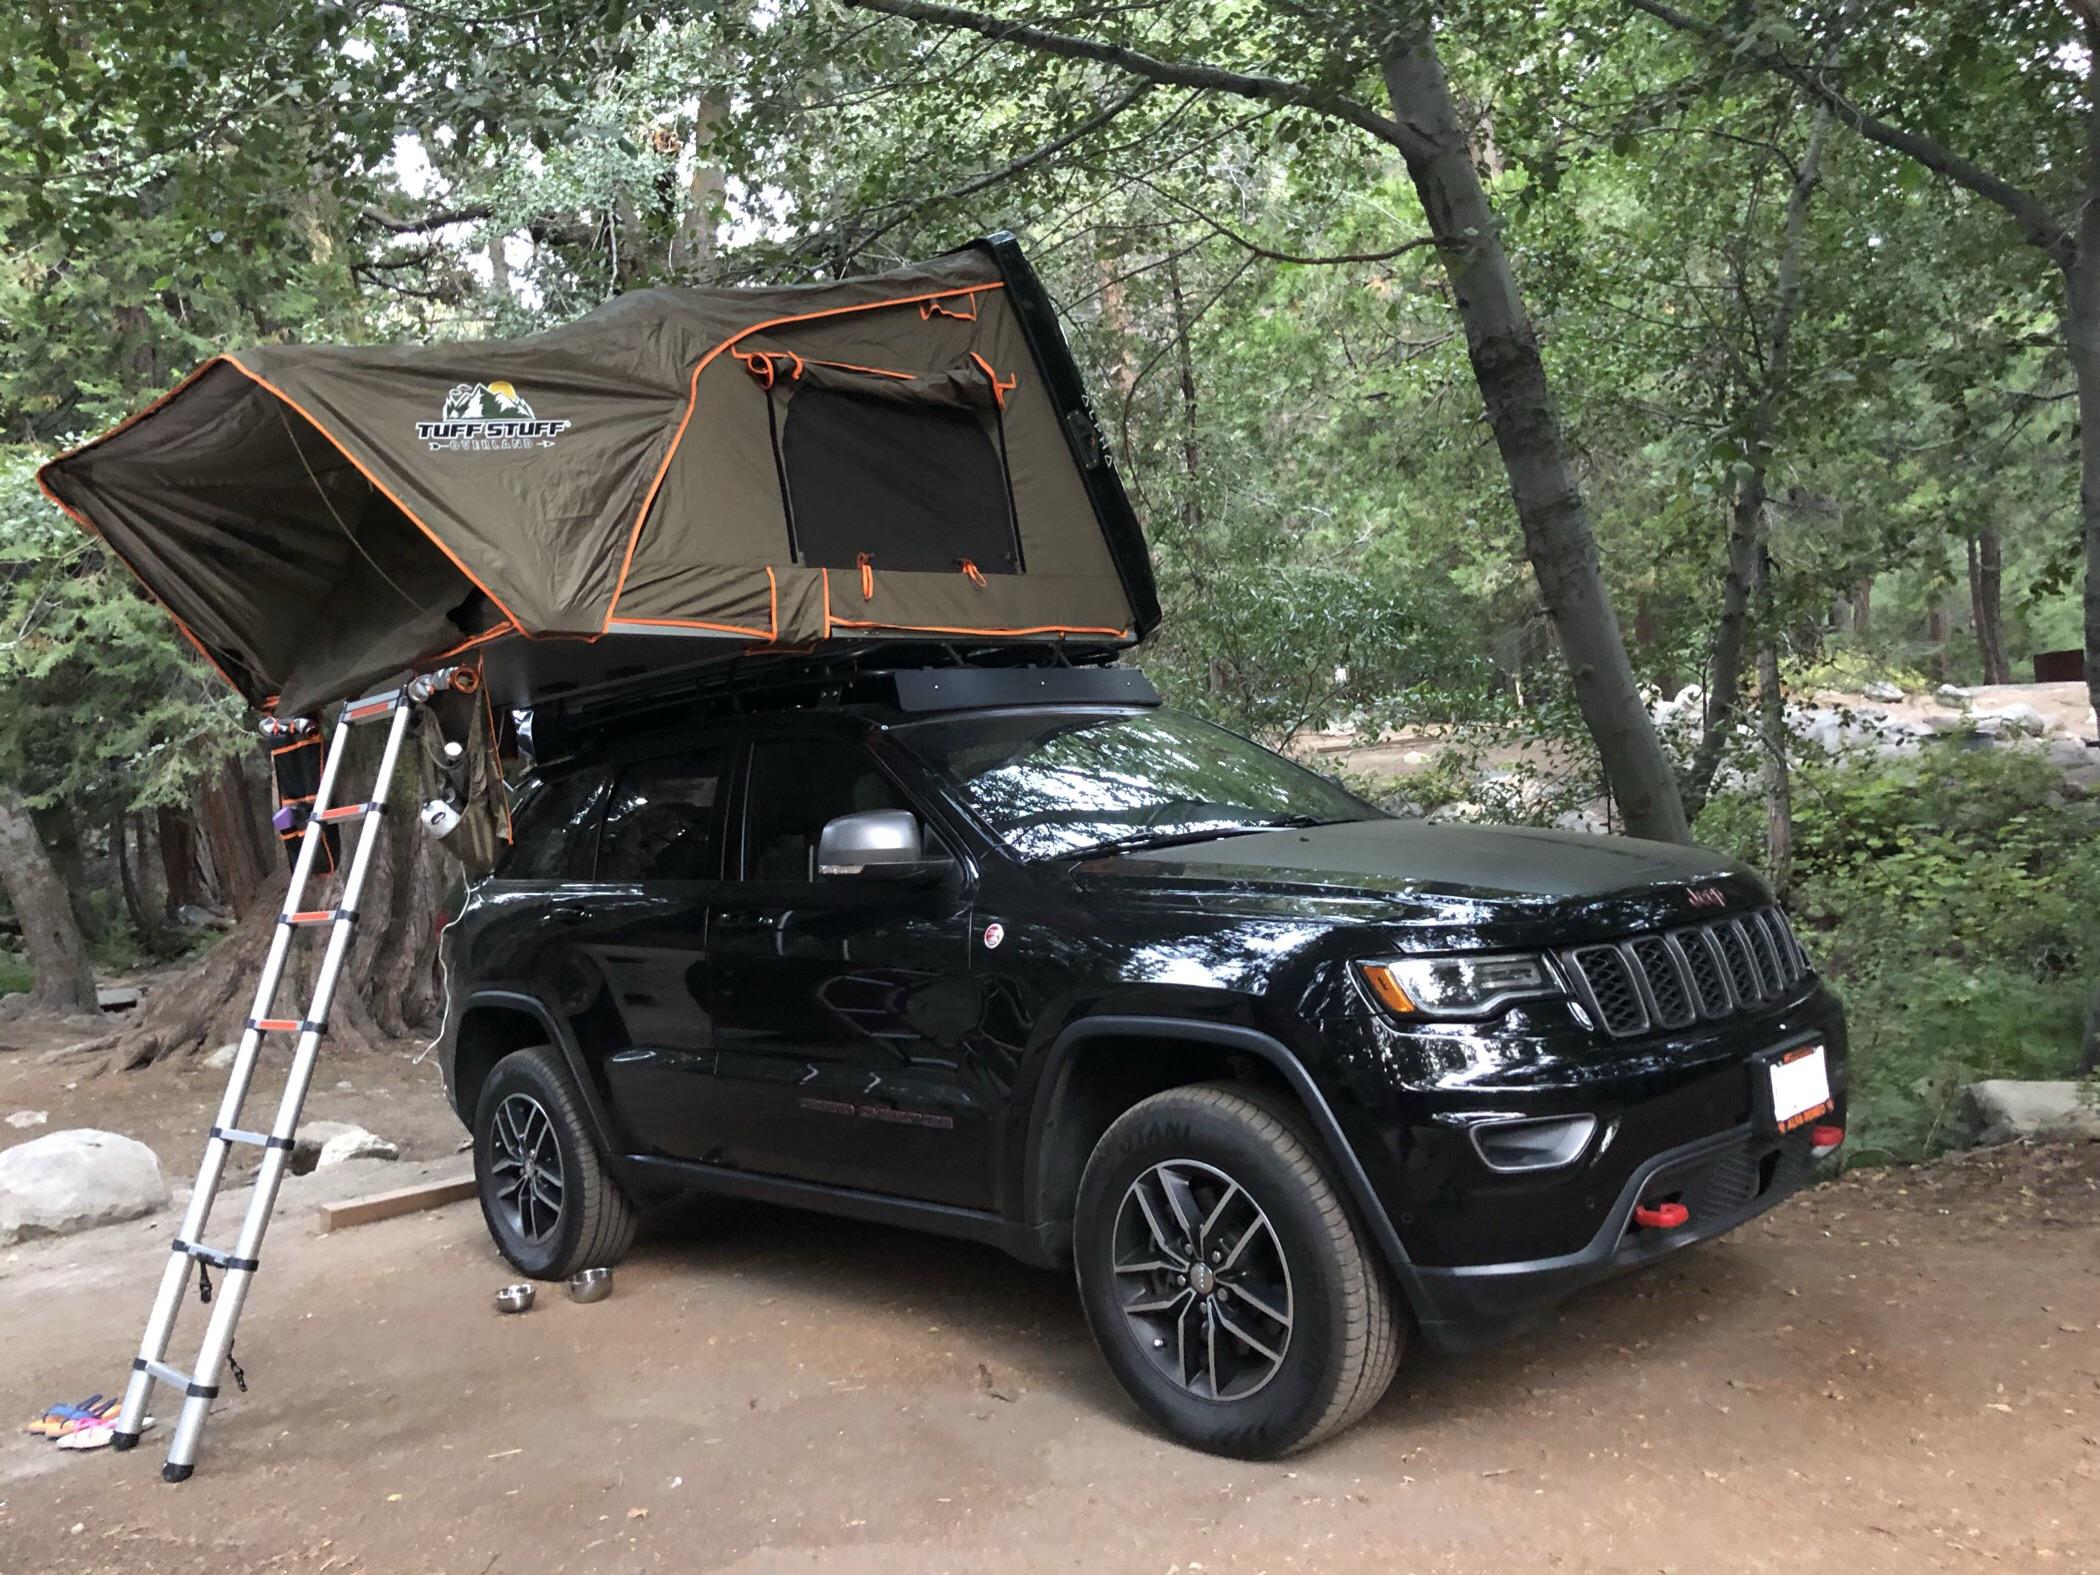 Jeep Grand Cherokee Camping Setup: Unleash Your Adventure!